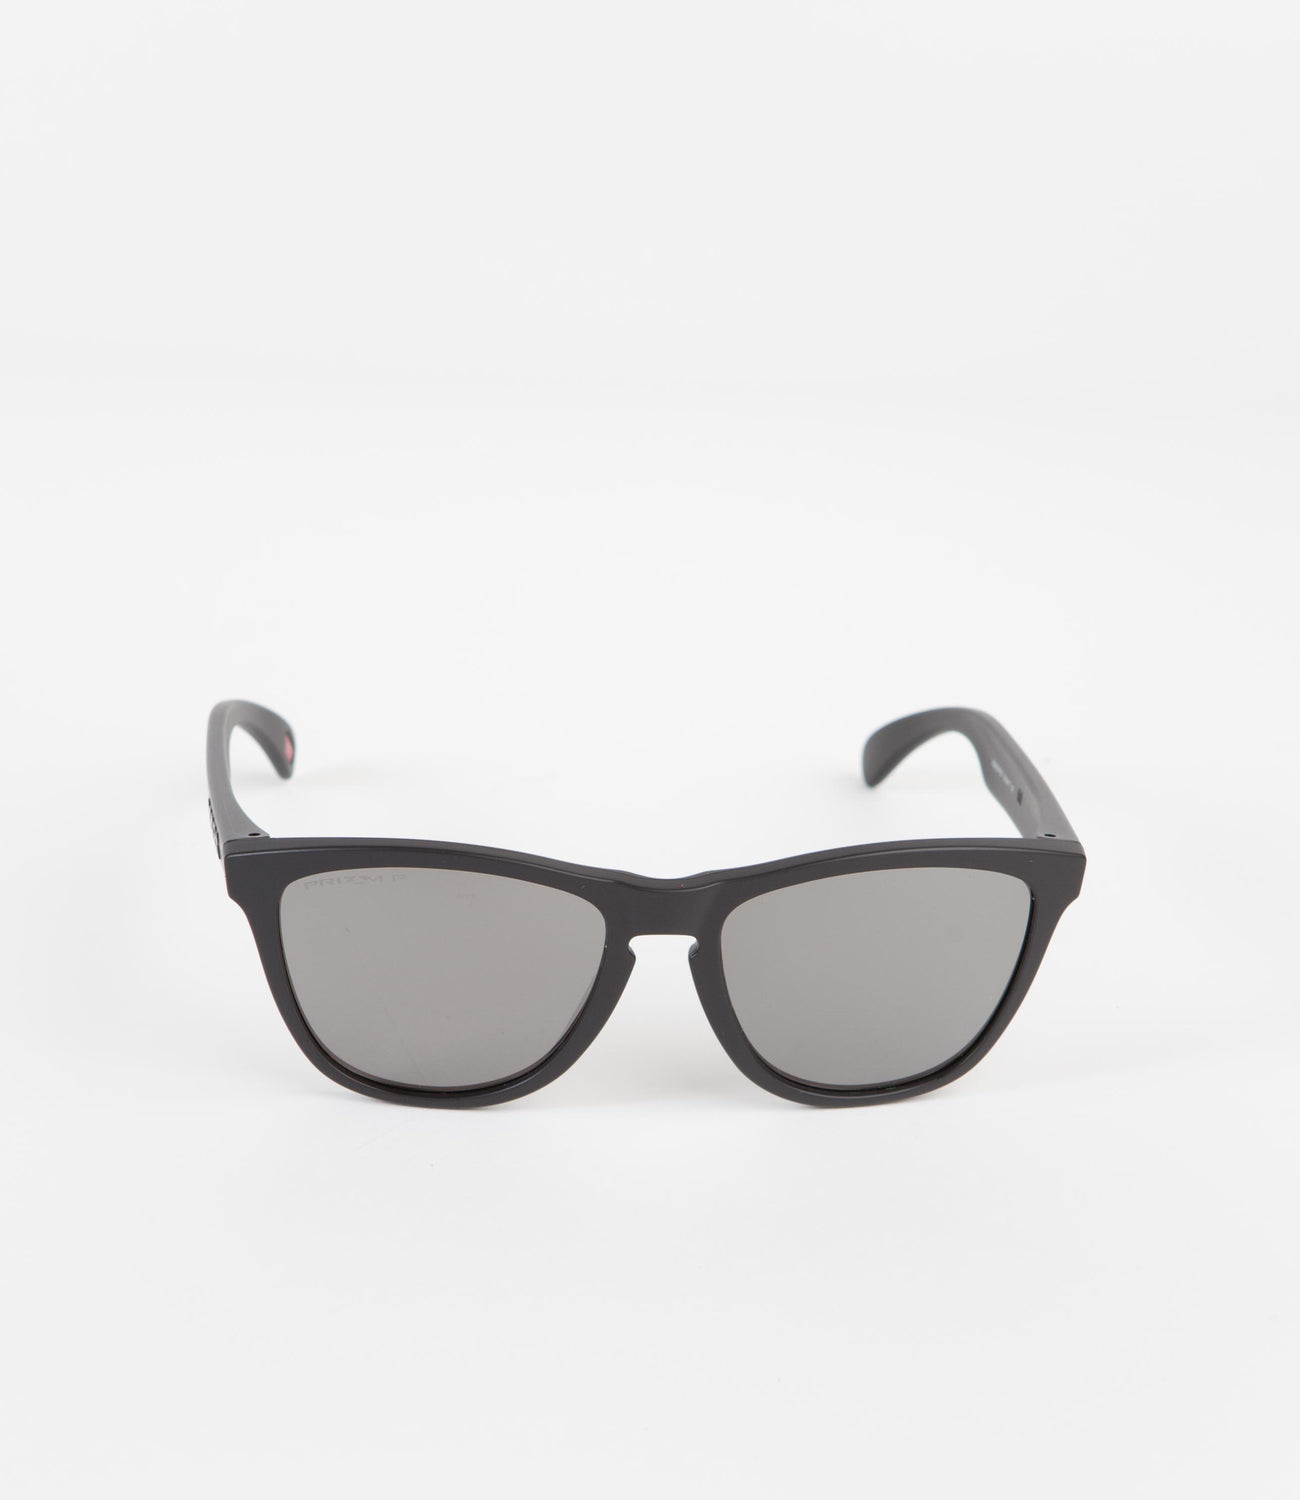 Oakley Frogskins Sunglasses - Matte Black / Prizm Black | Flatspot